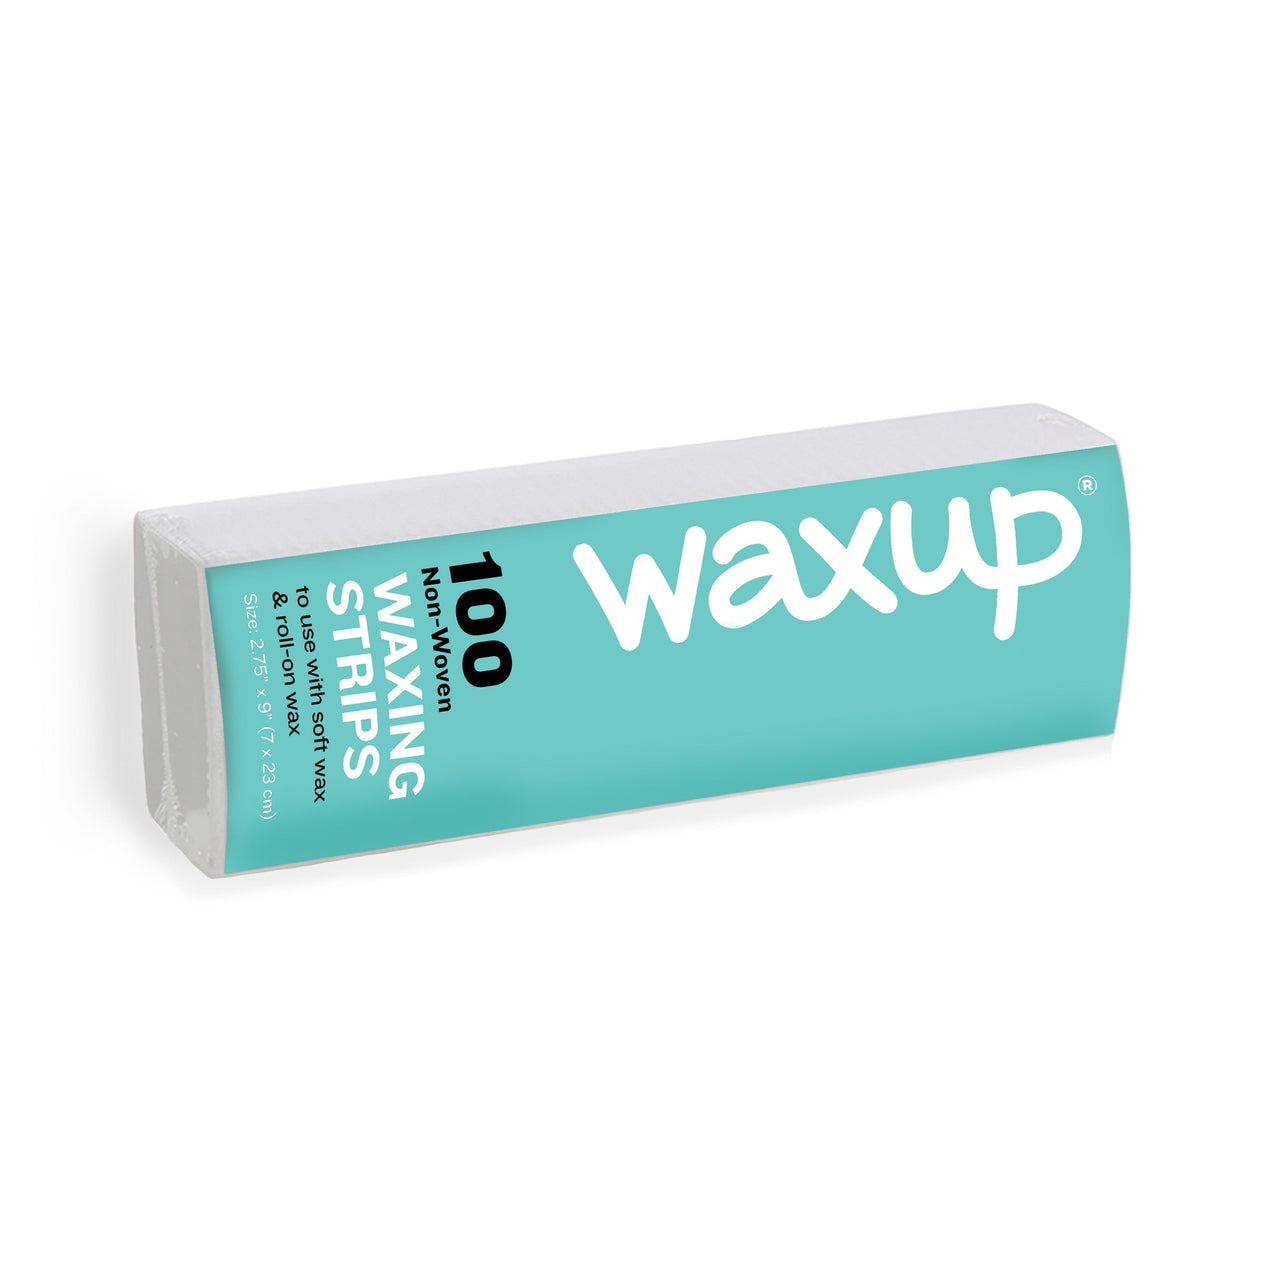 Non Woven Waxing Strips 3"x9" 100 Count Buy with Prime - thatswaxup -  - Non Woven Waxing Strips - waxup hair removal wax body waxing kit women and men professional waxing supplies